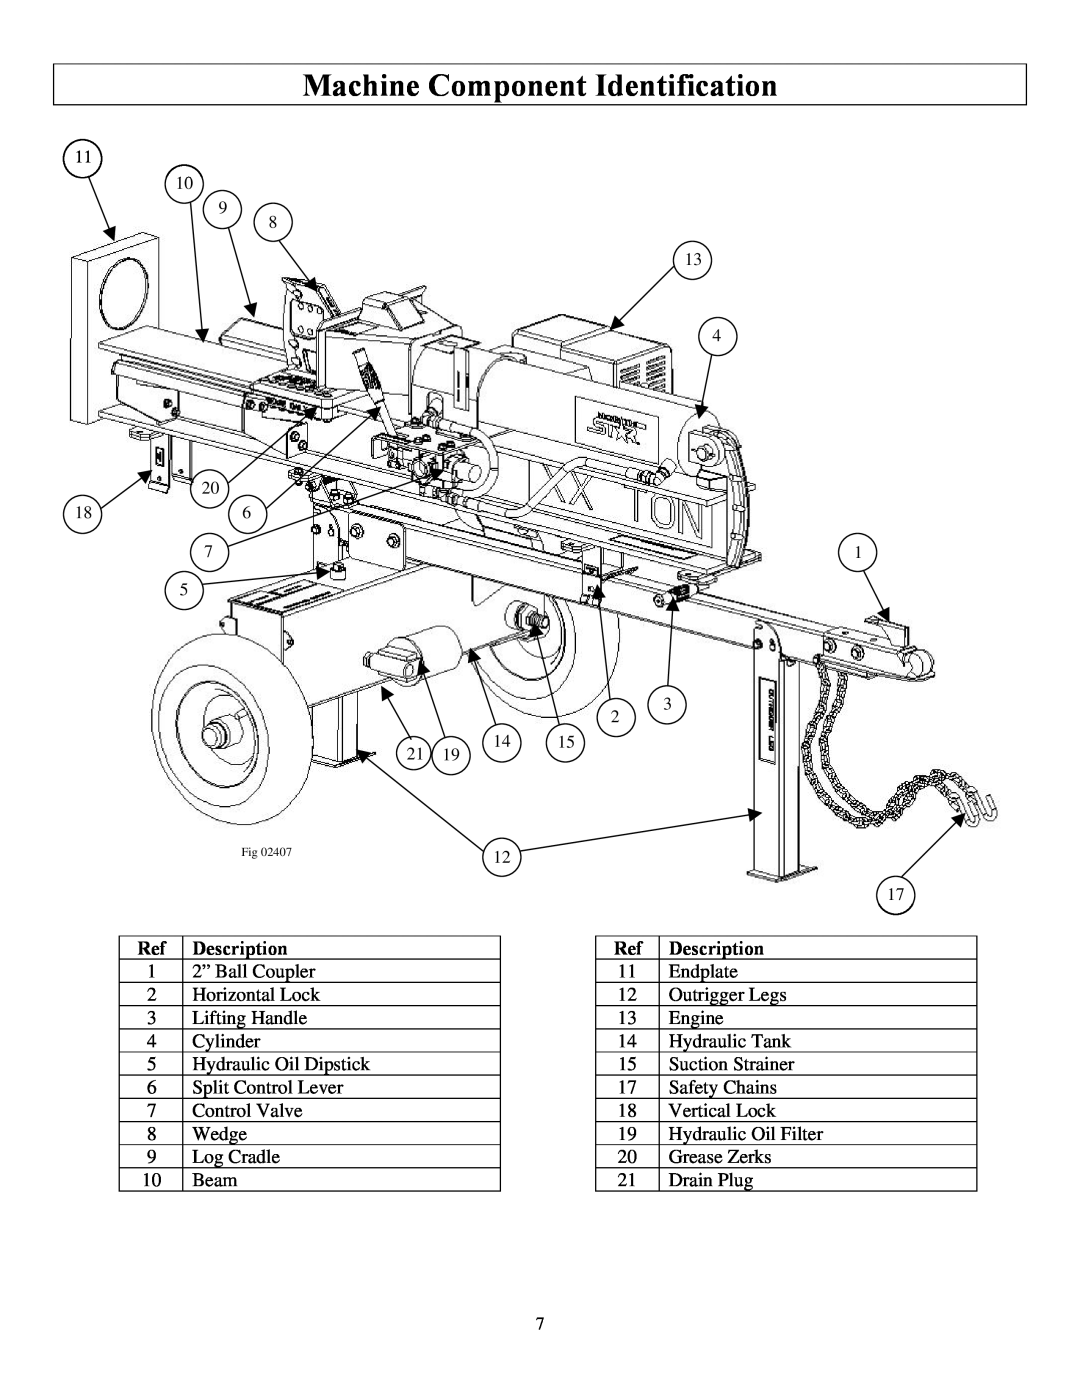 North Star M1108D owner manual Machine Component Identification, Description 